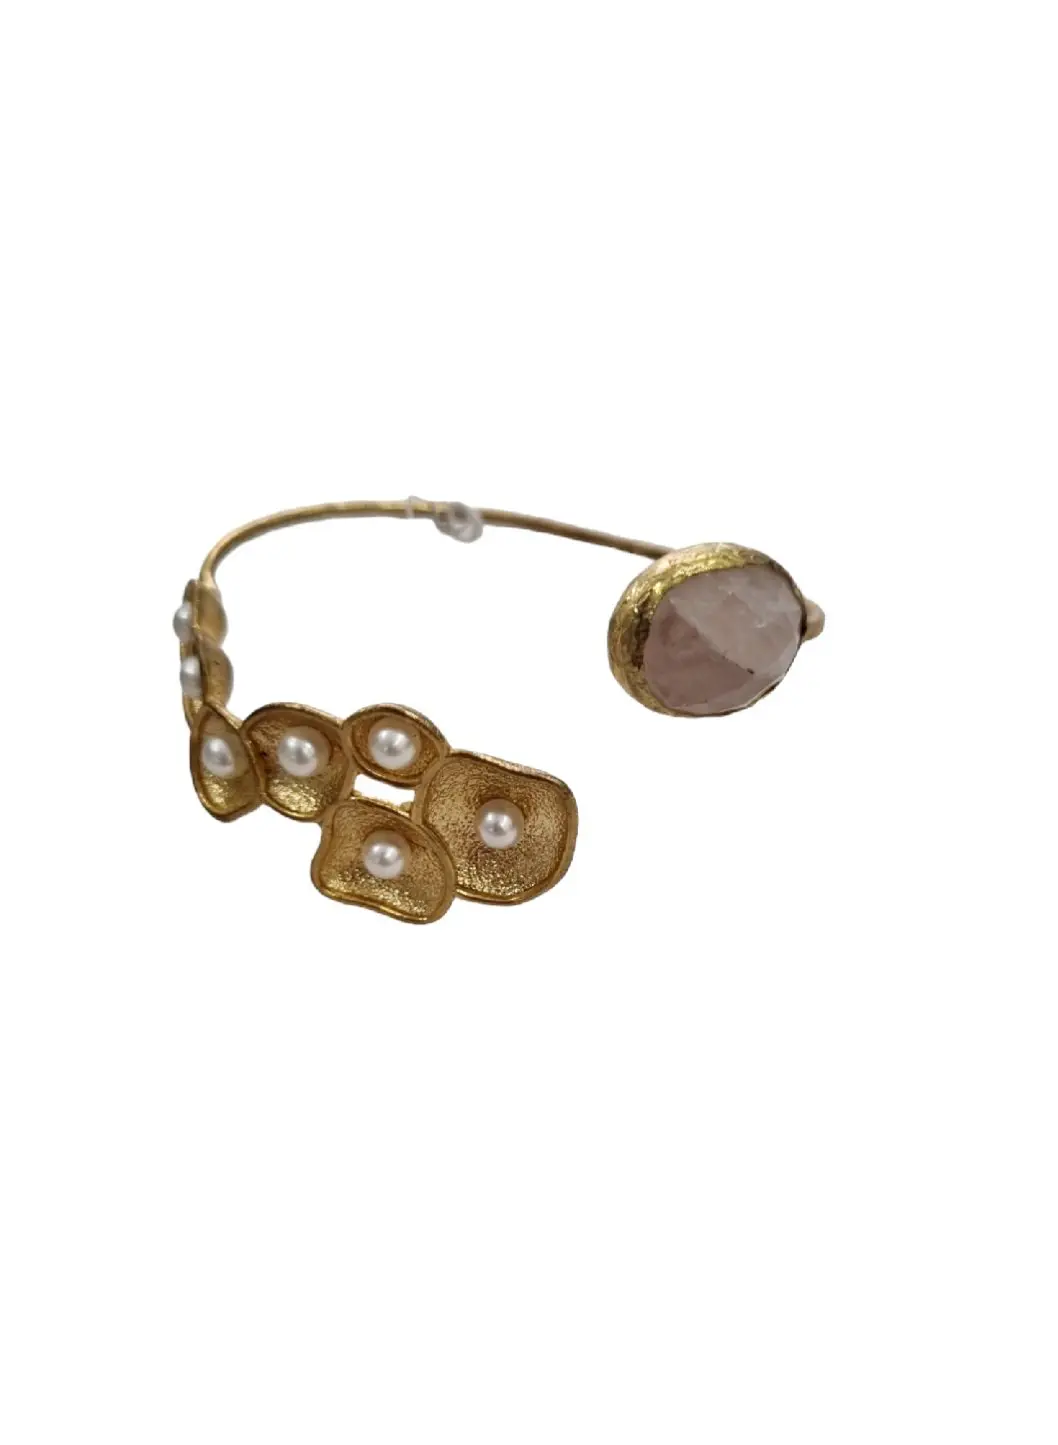 Brass interlocking bracelet with rose quartz and freshwater pearls – Sophisticated jewel